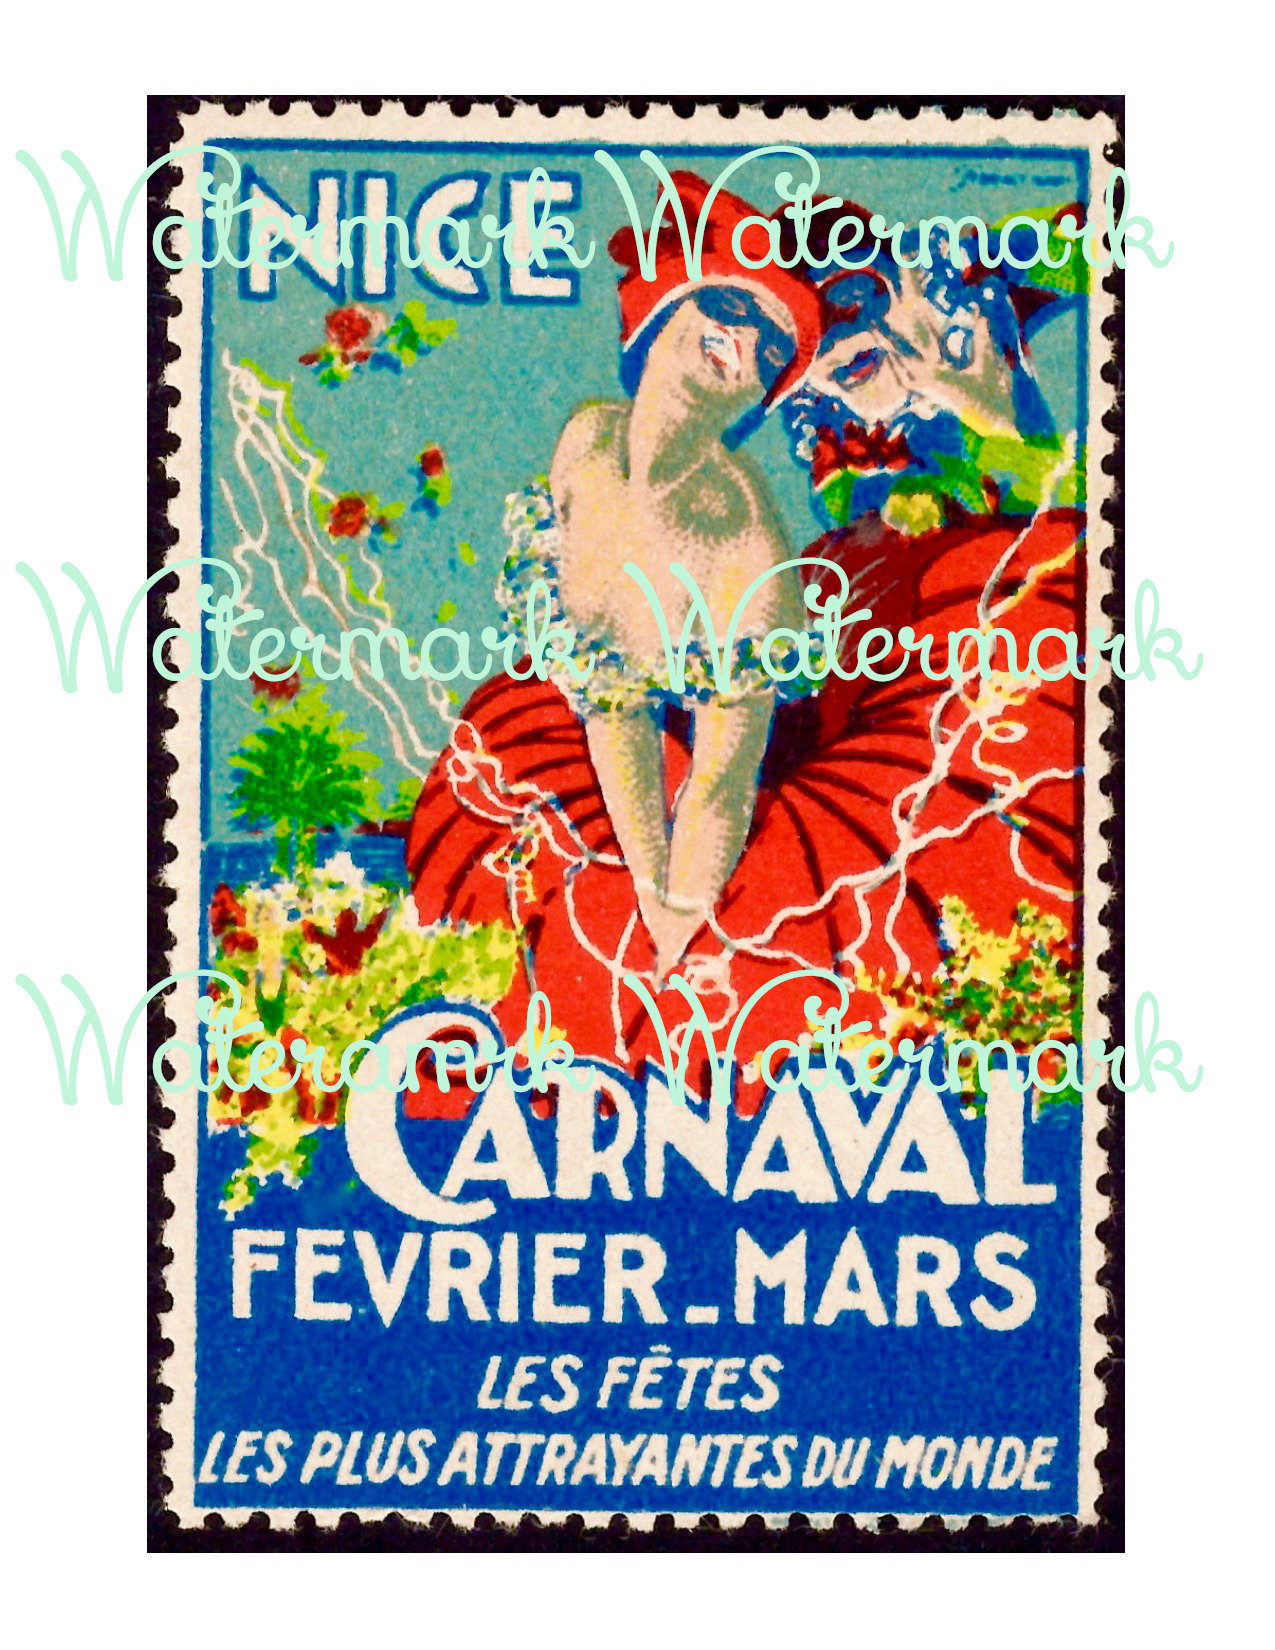 Vintage Art Deco French Carnaval, From Nice, Poster Stamp Image, Instant  Digital Download 